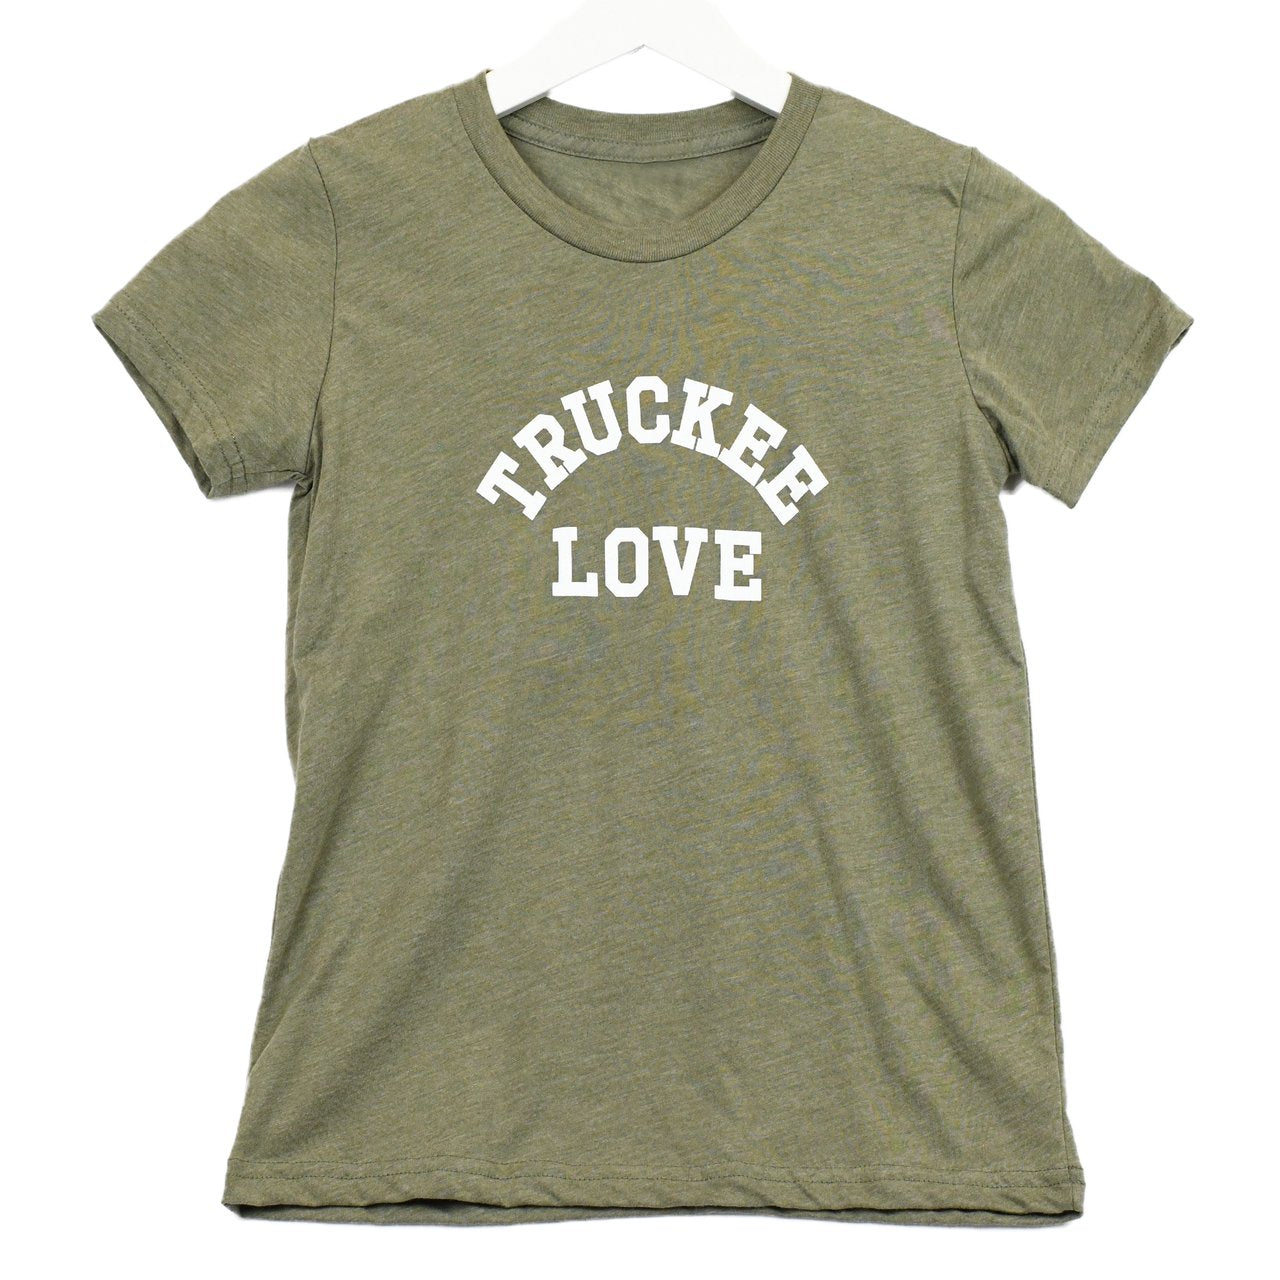 Truckee Love T-Shirt - Olive Green